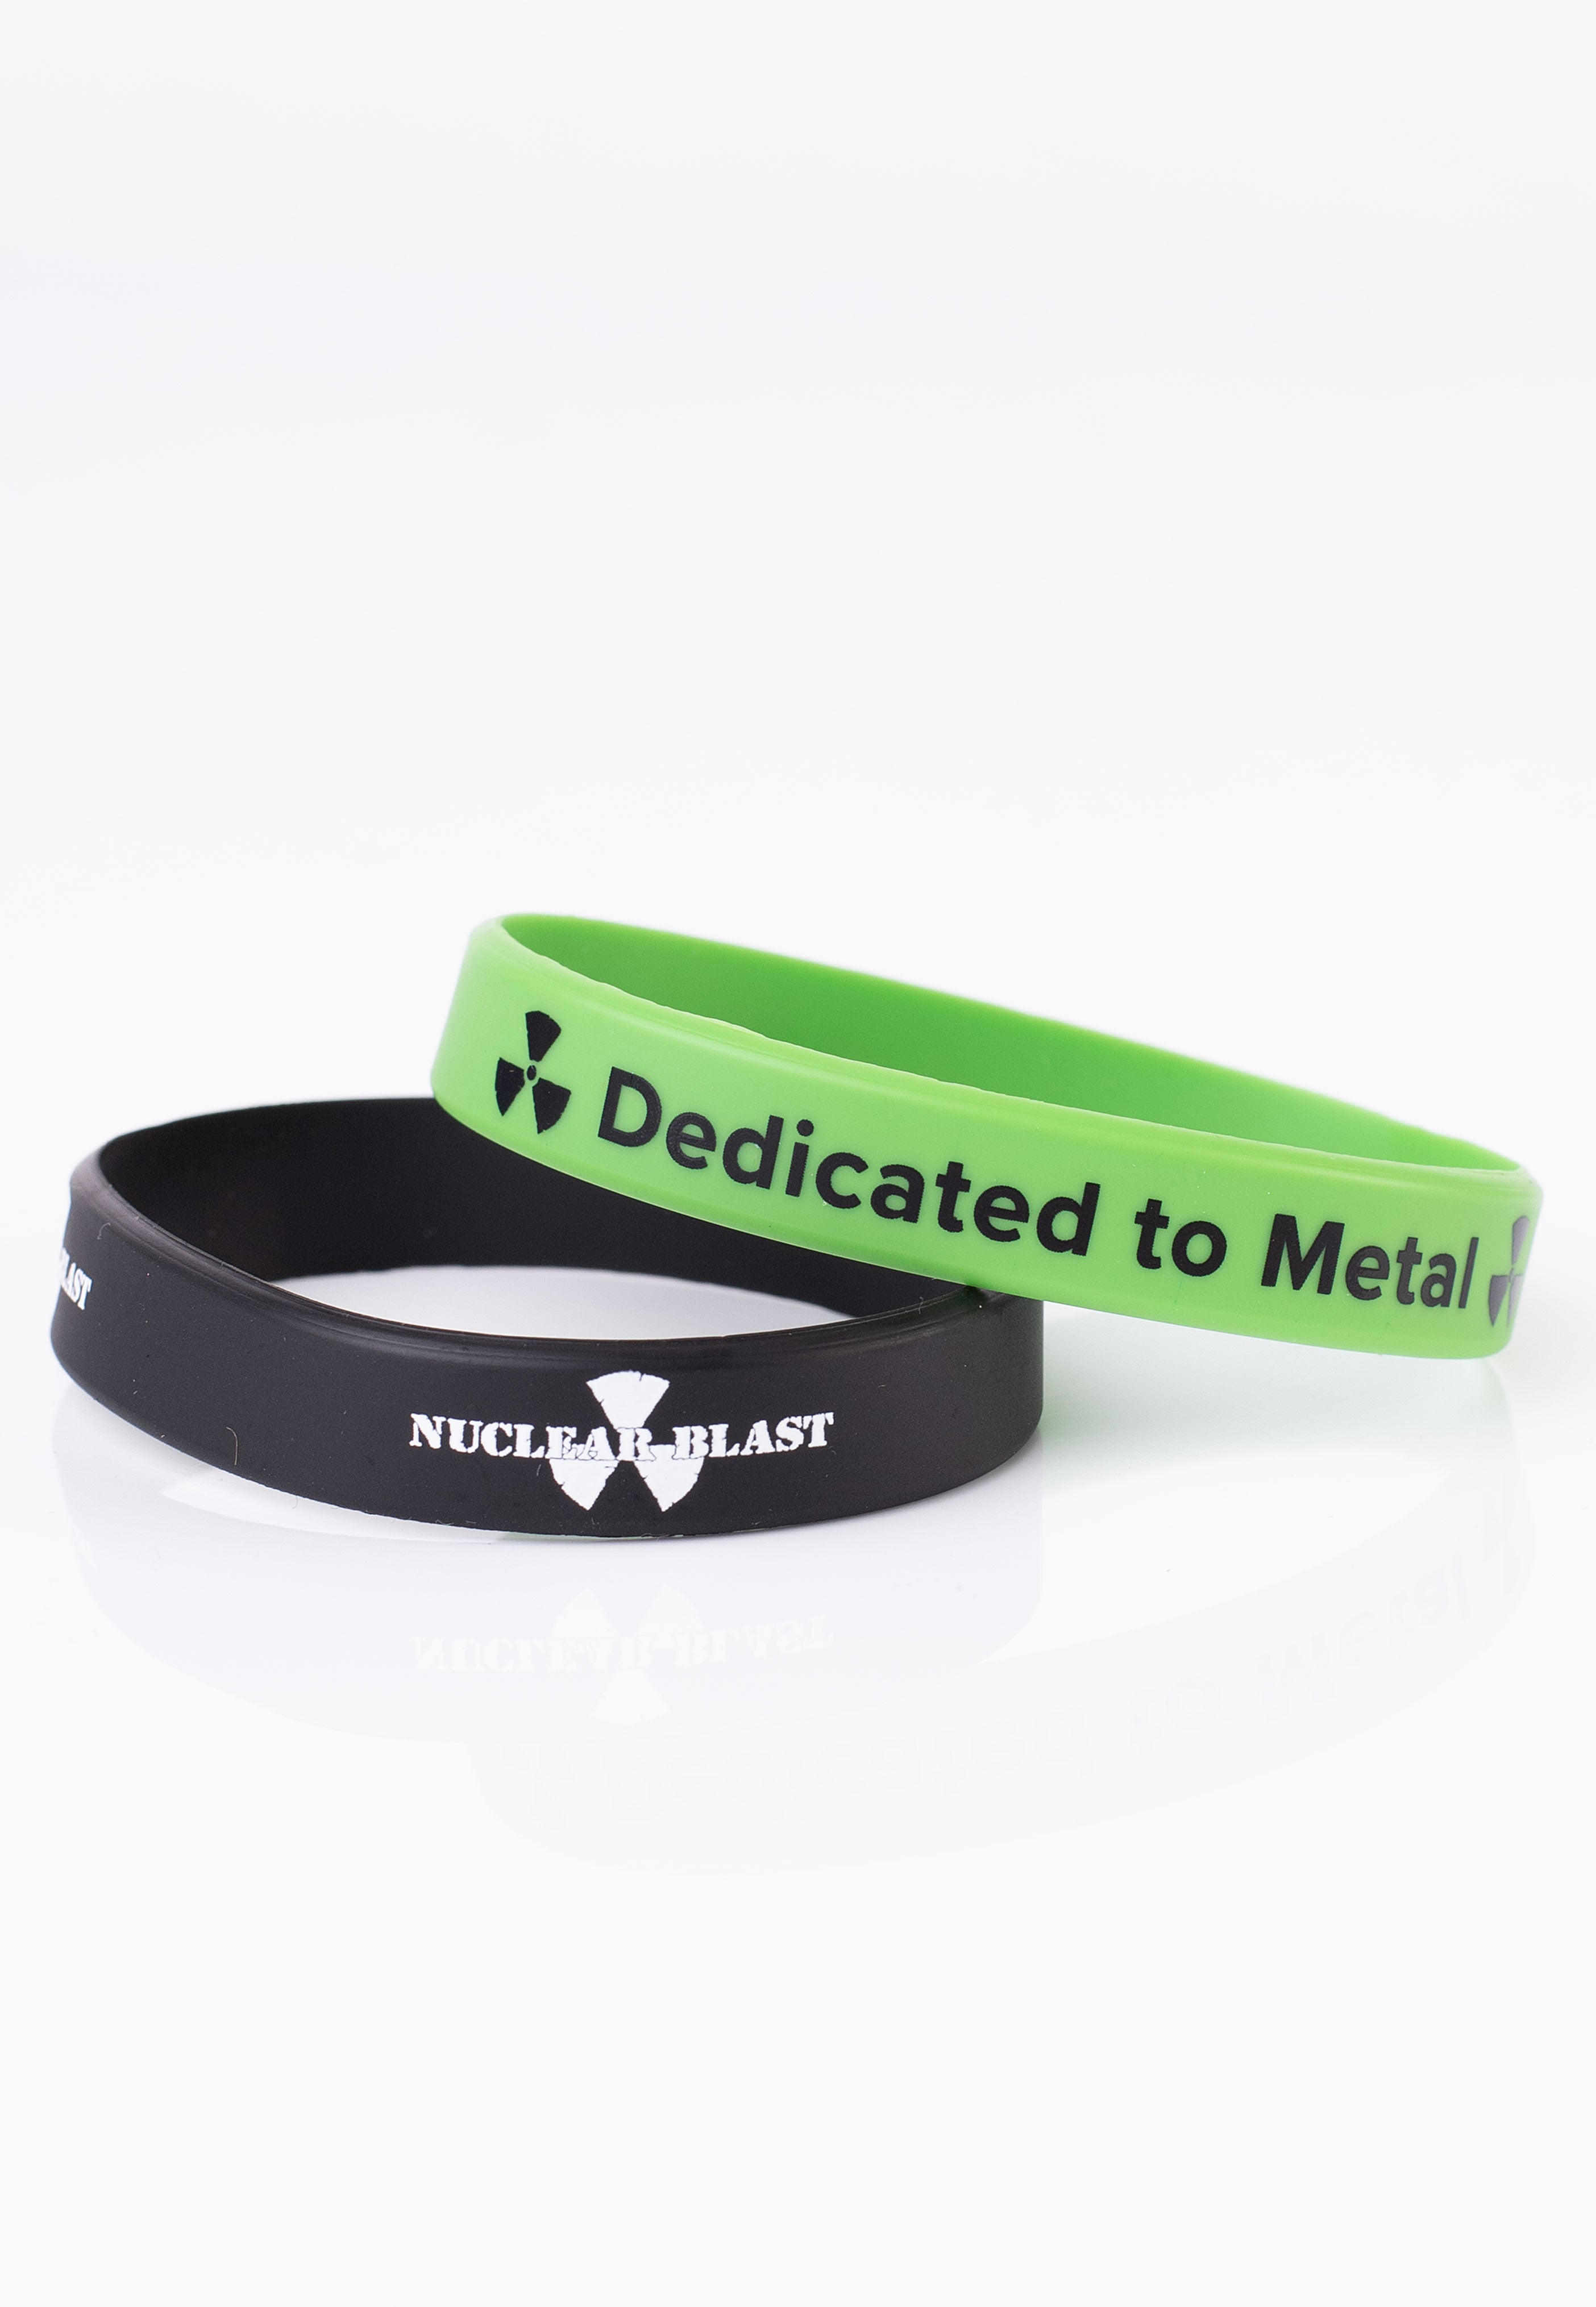 Nuclear Blast - Dedicated To Metal  - Wristband